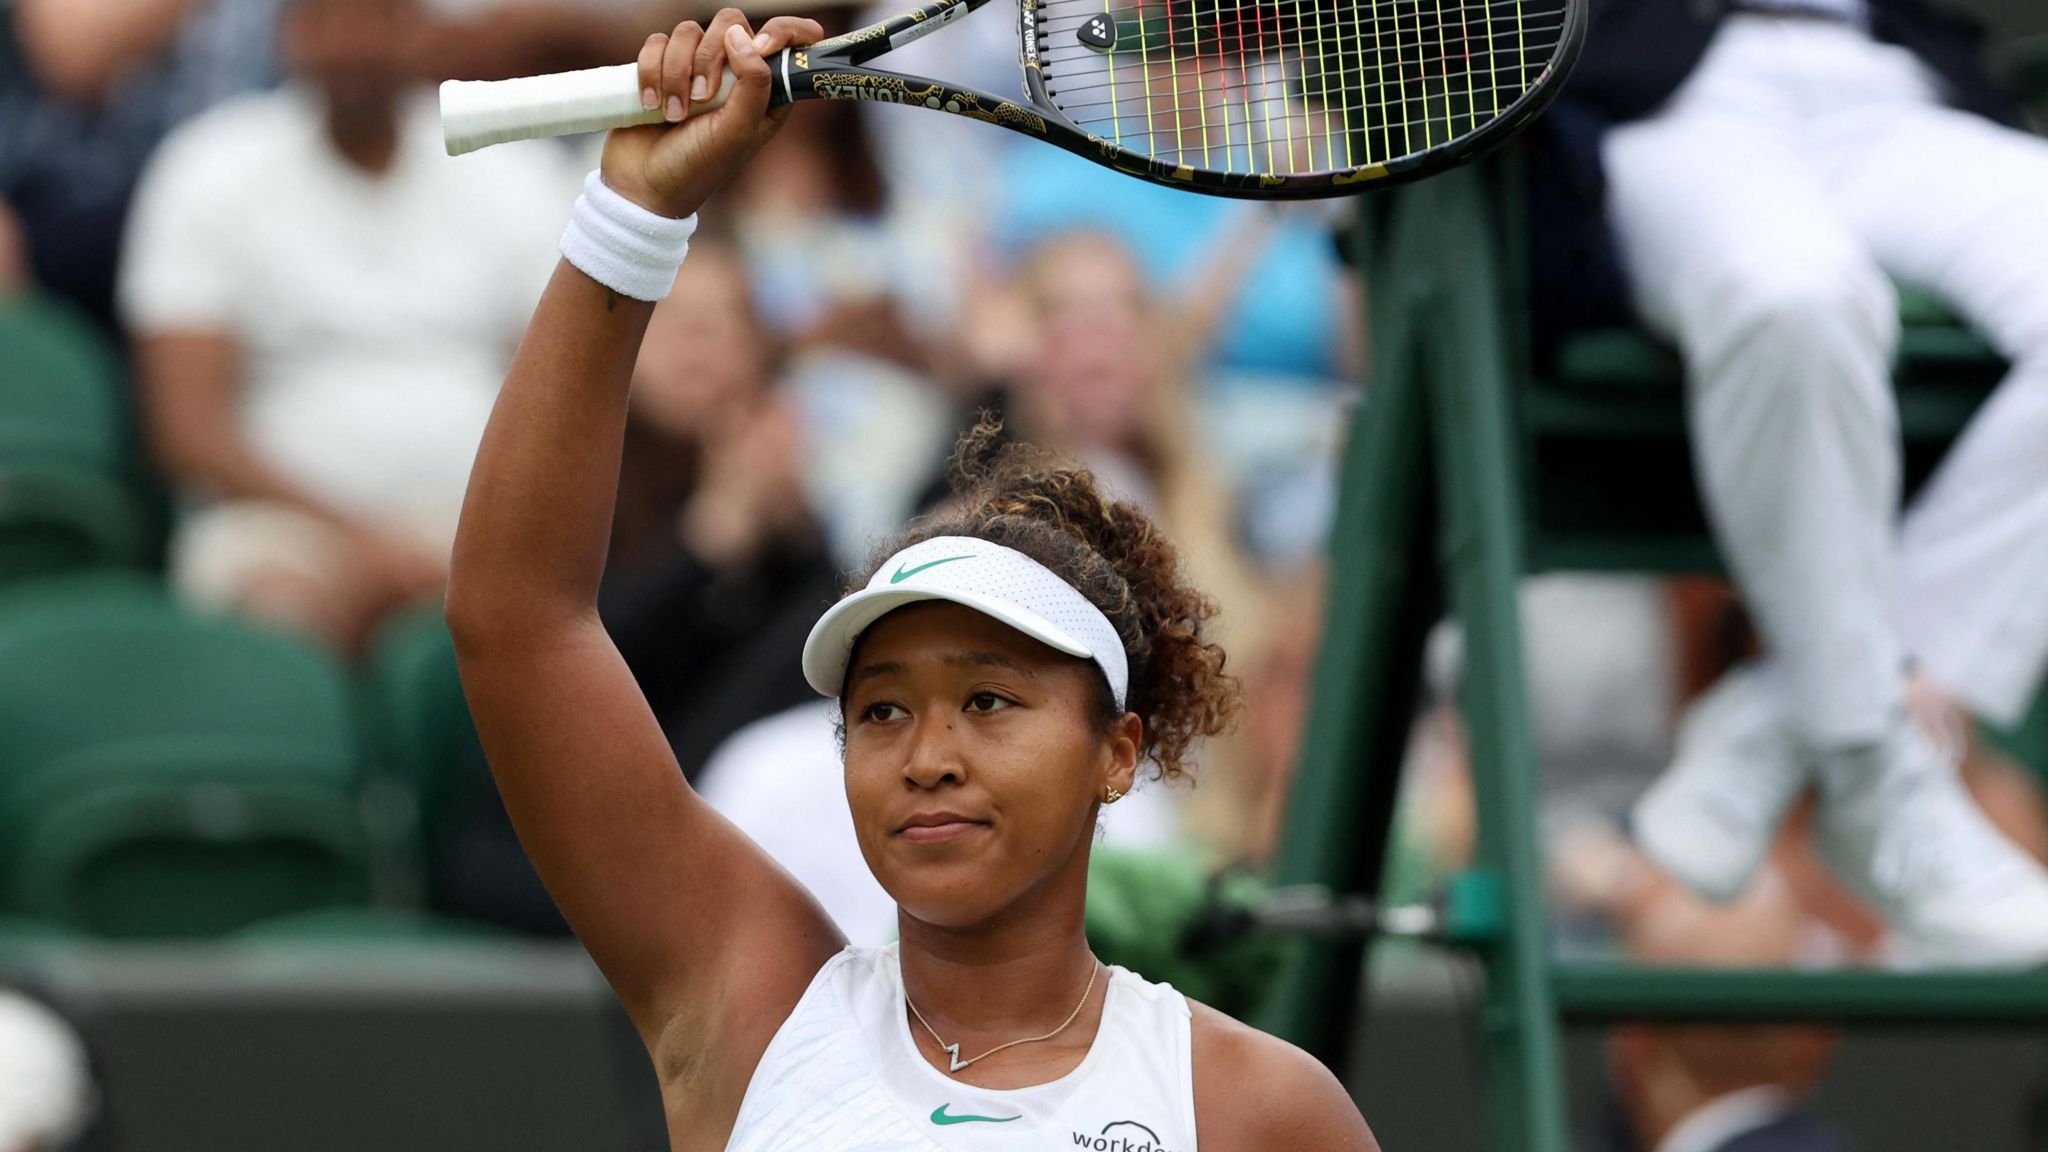 Naomi Osaka raises her racquet to the crowd after winning her first-round match at Wimbledon